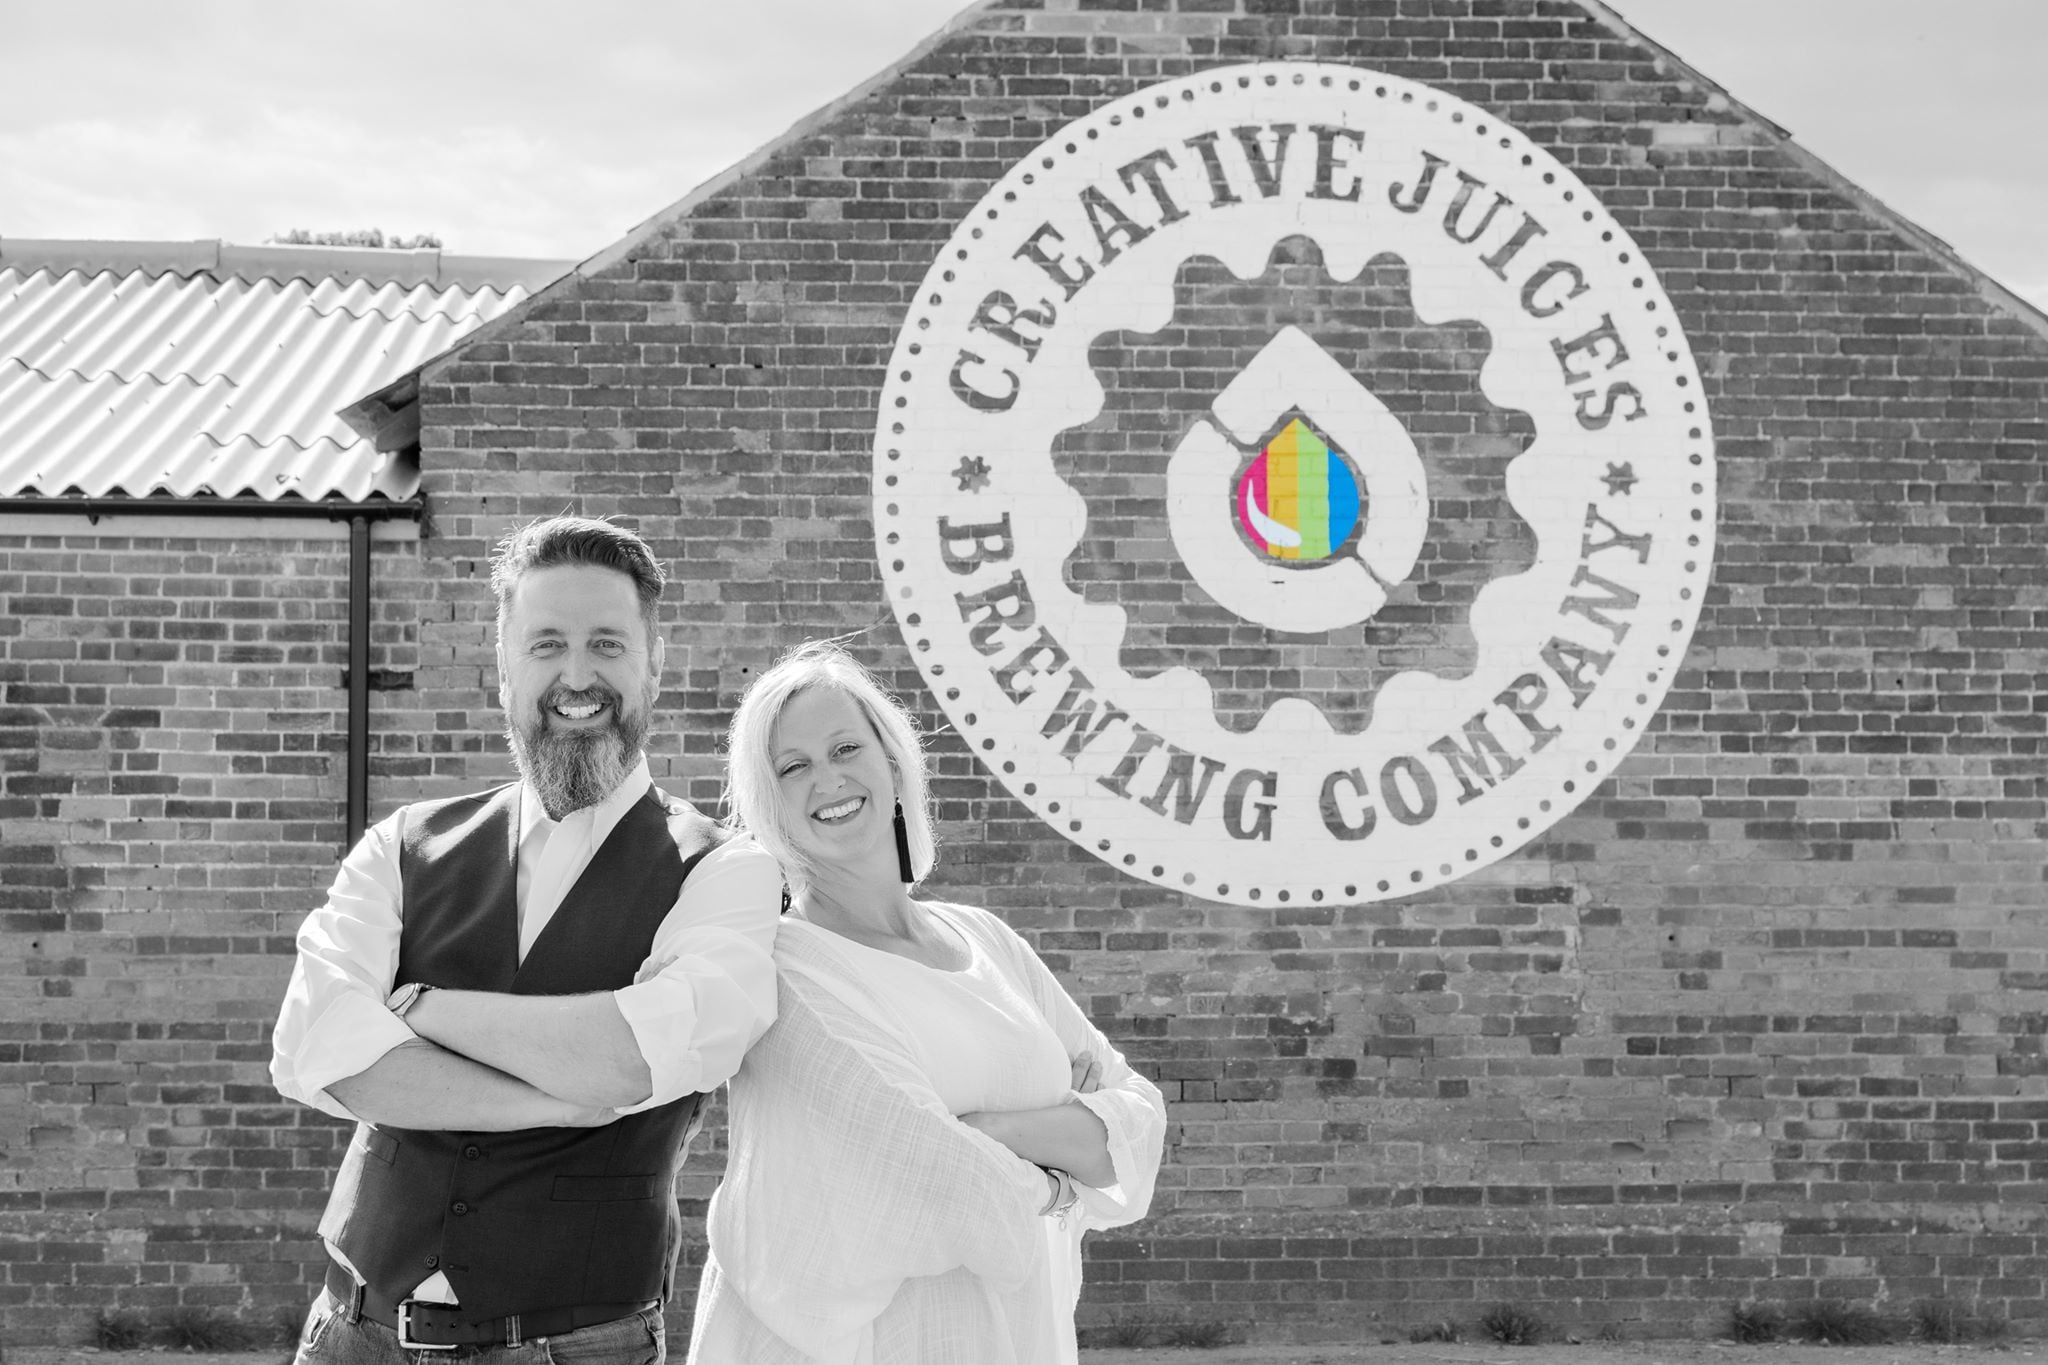 Creative Juices Brewing Company: Rickmansworth, Hertfordshire